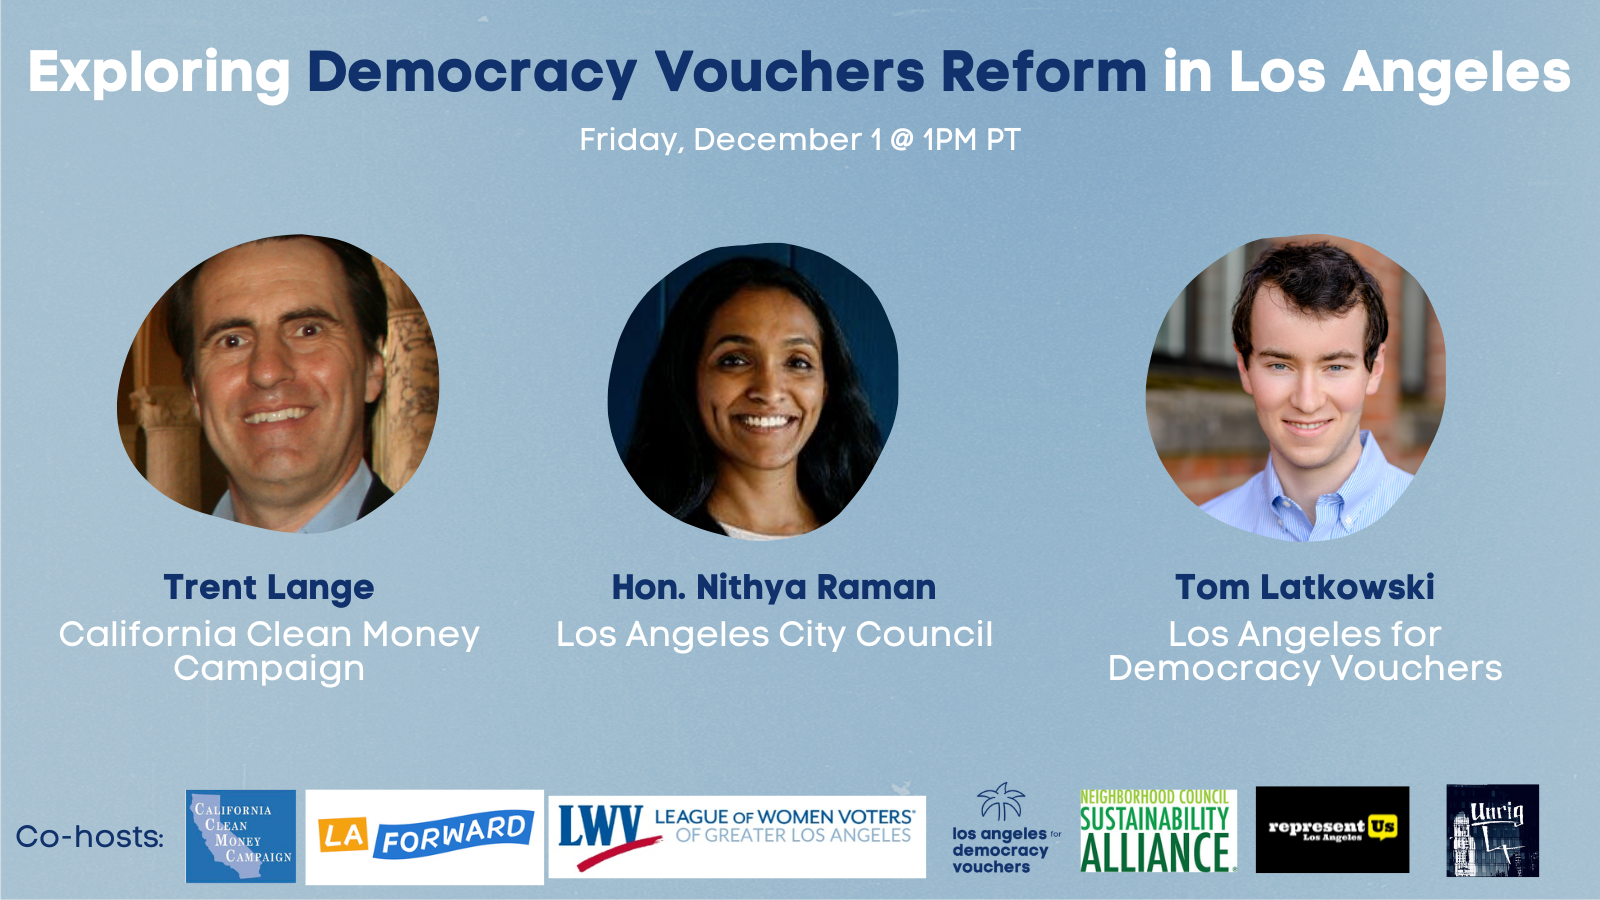 🎥 Video: Exploring Democracy Vouchers Reform in LA